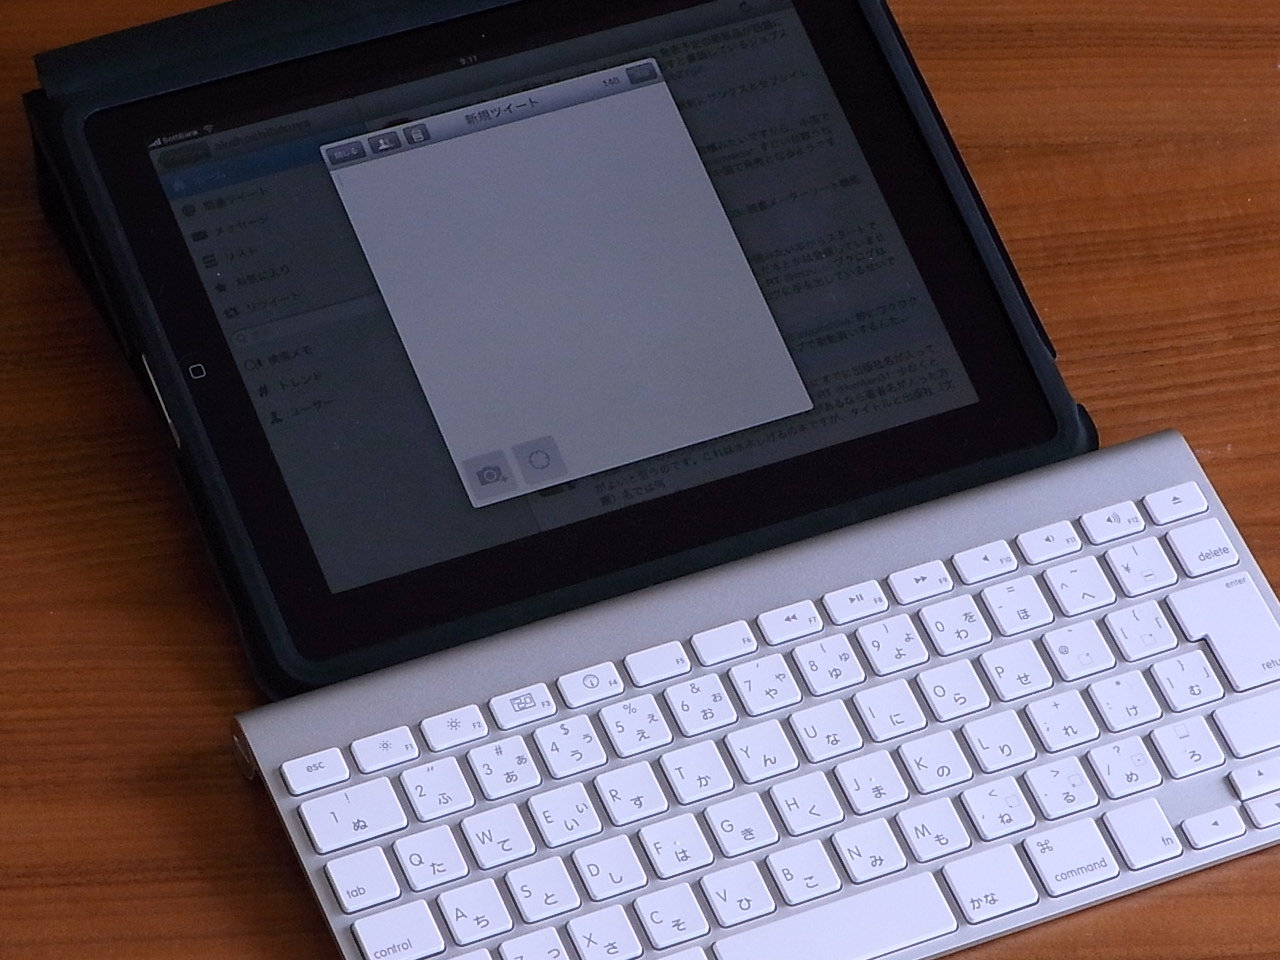 iPadをアップル純正ワイヤレスキーボード(Apple Wireless Keyboard)で操作してみた | akahoshitakuya.com